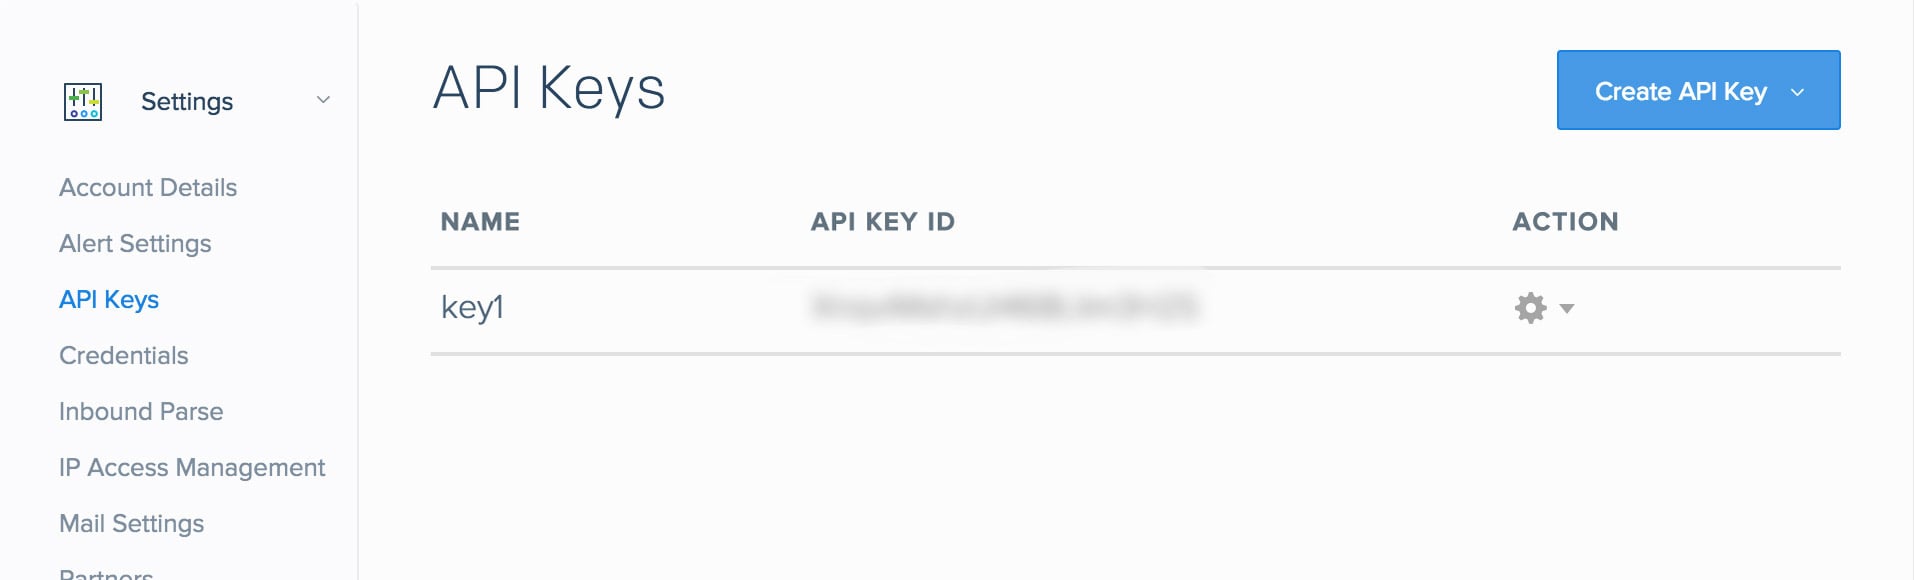 SendGrid API Keys Page